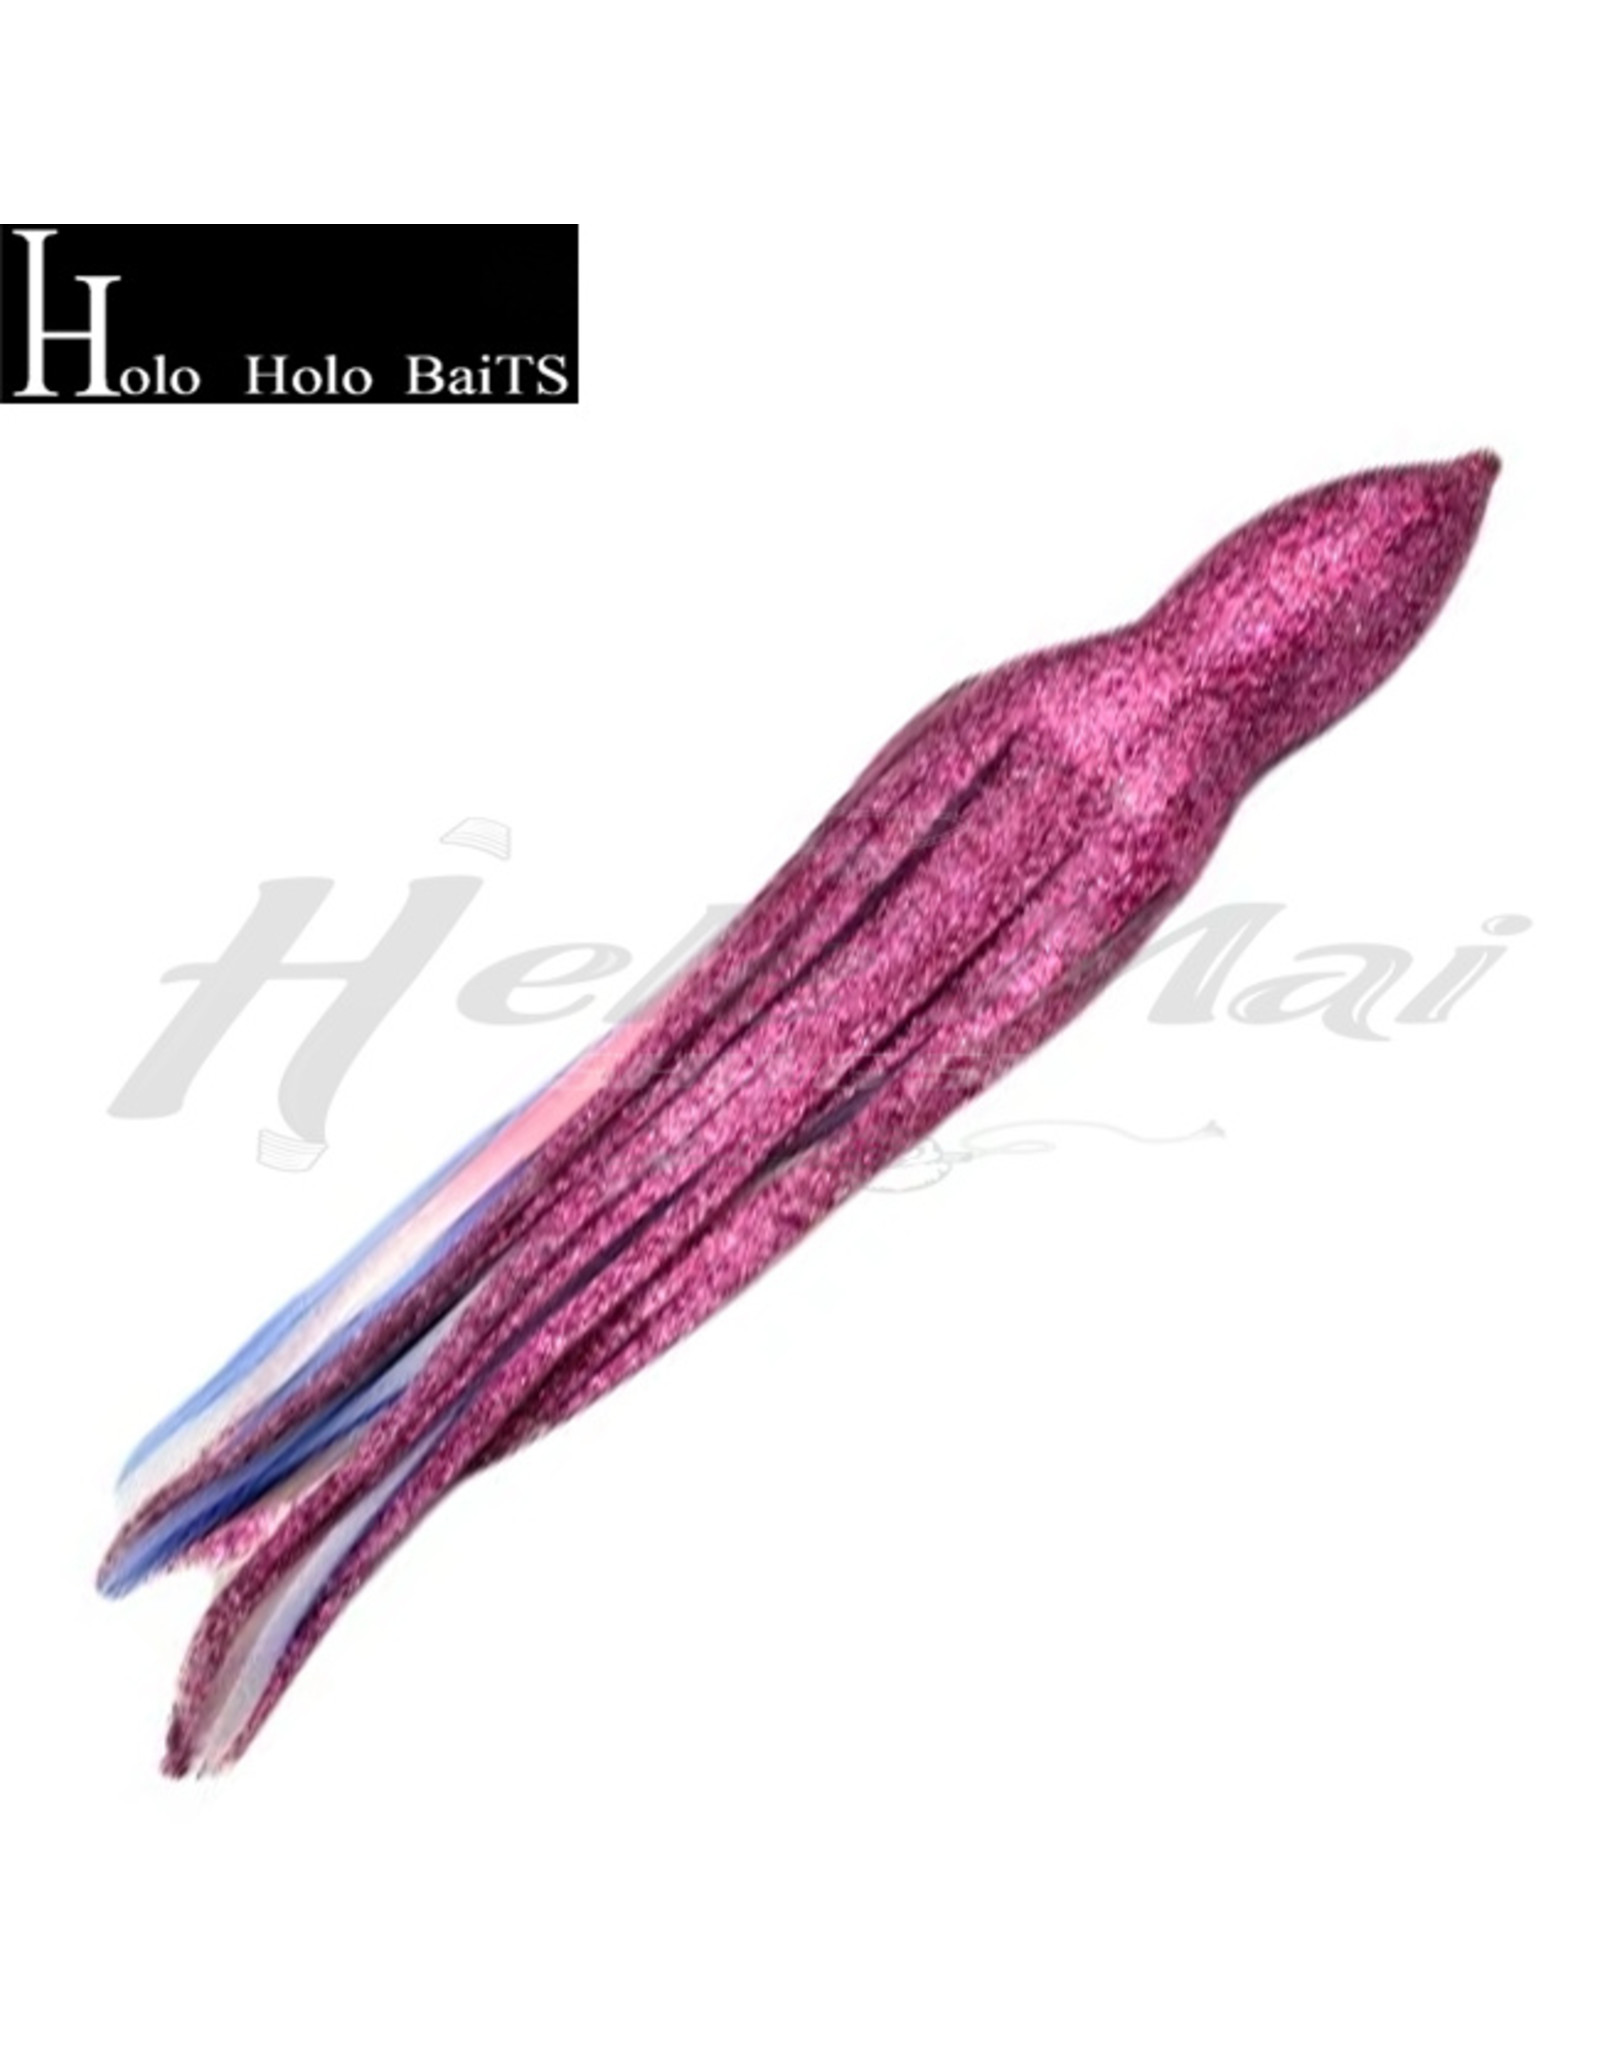 HOLO HOLO Squid Skirt, 9" Salmon Pink Stipe Lavender, 1106